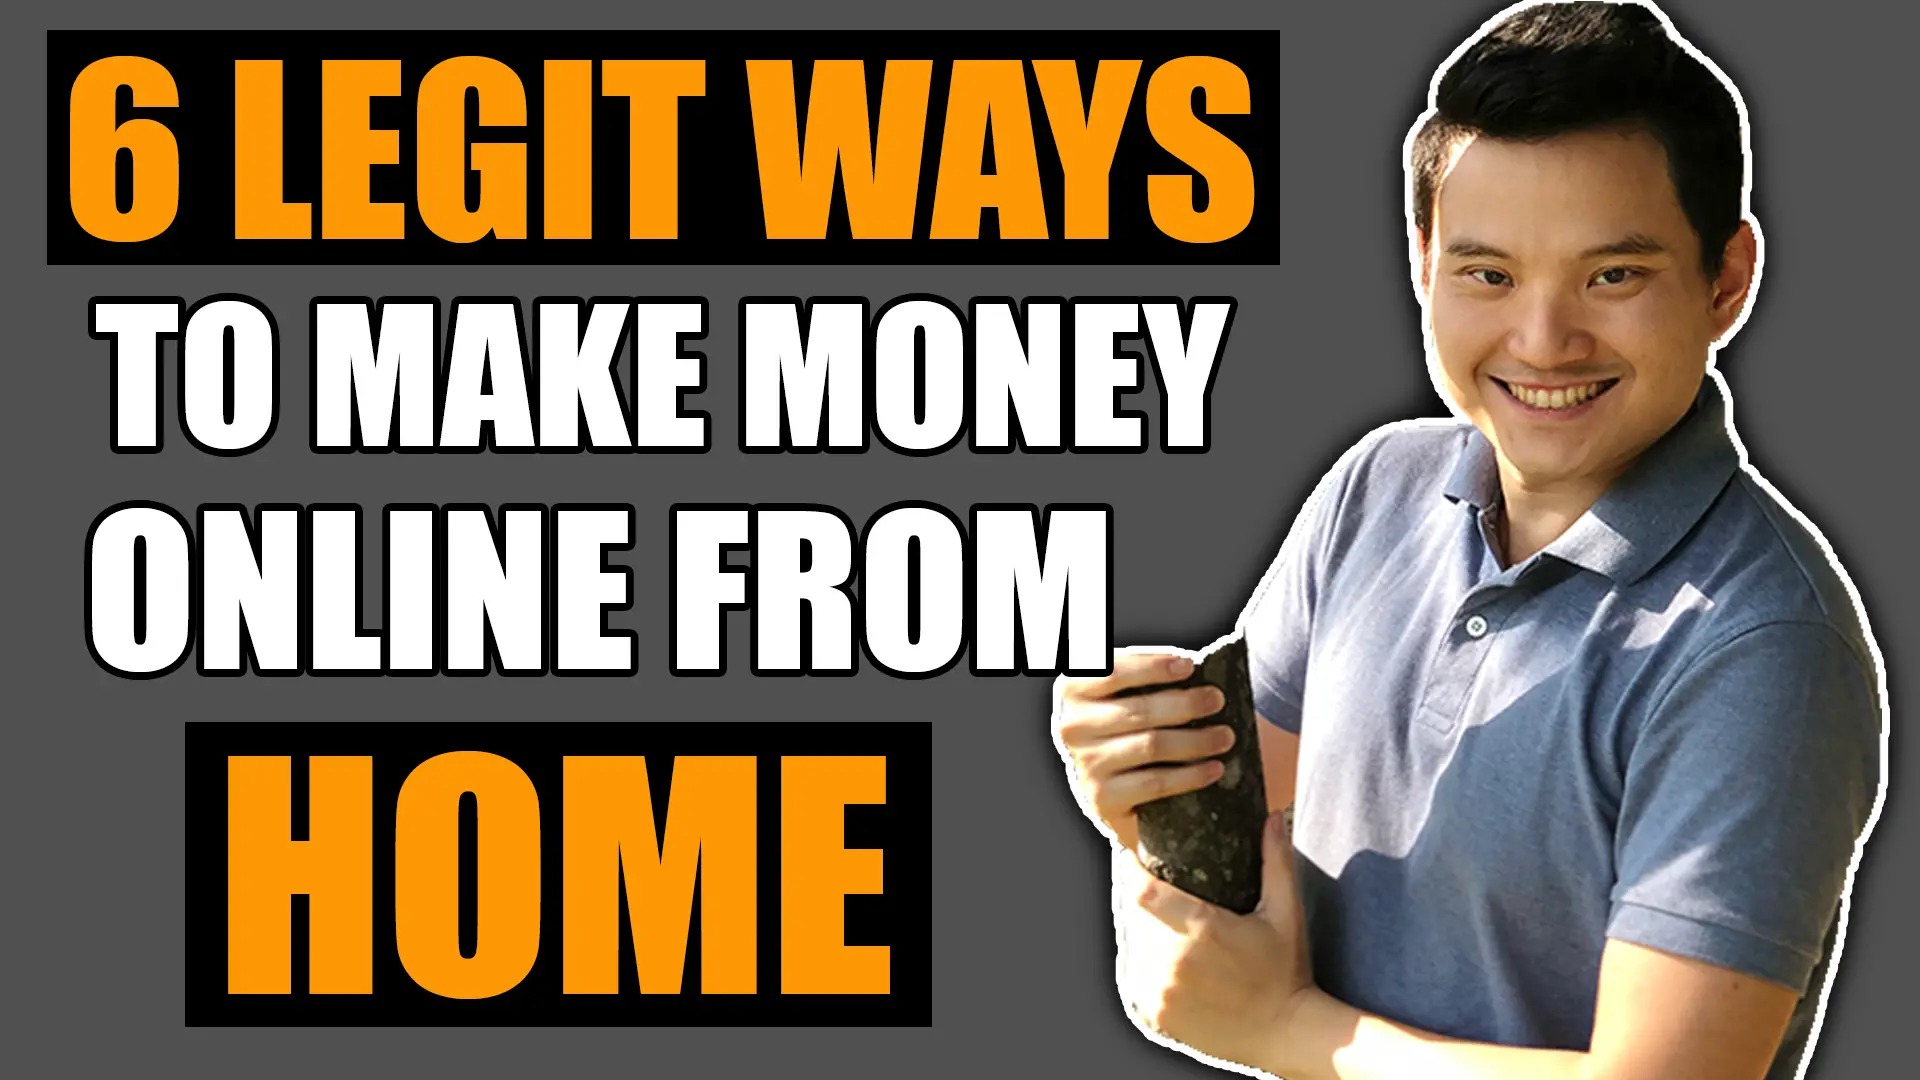 6 Legit Ways To Make Money Online From Home - FollowMikeWynn